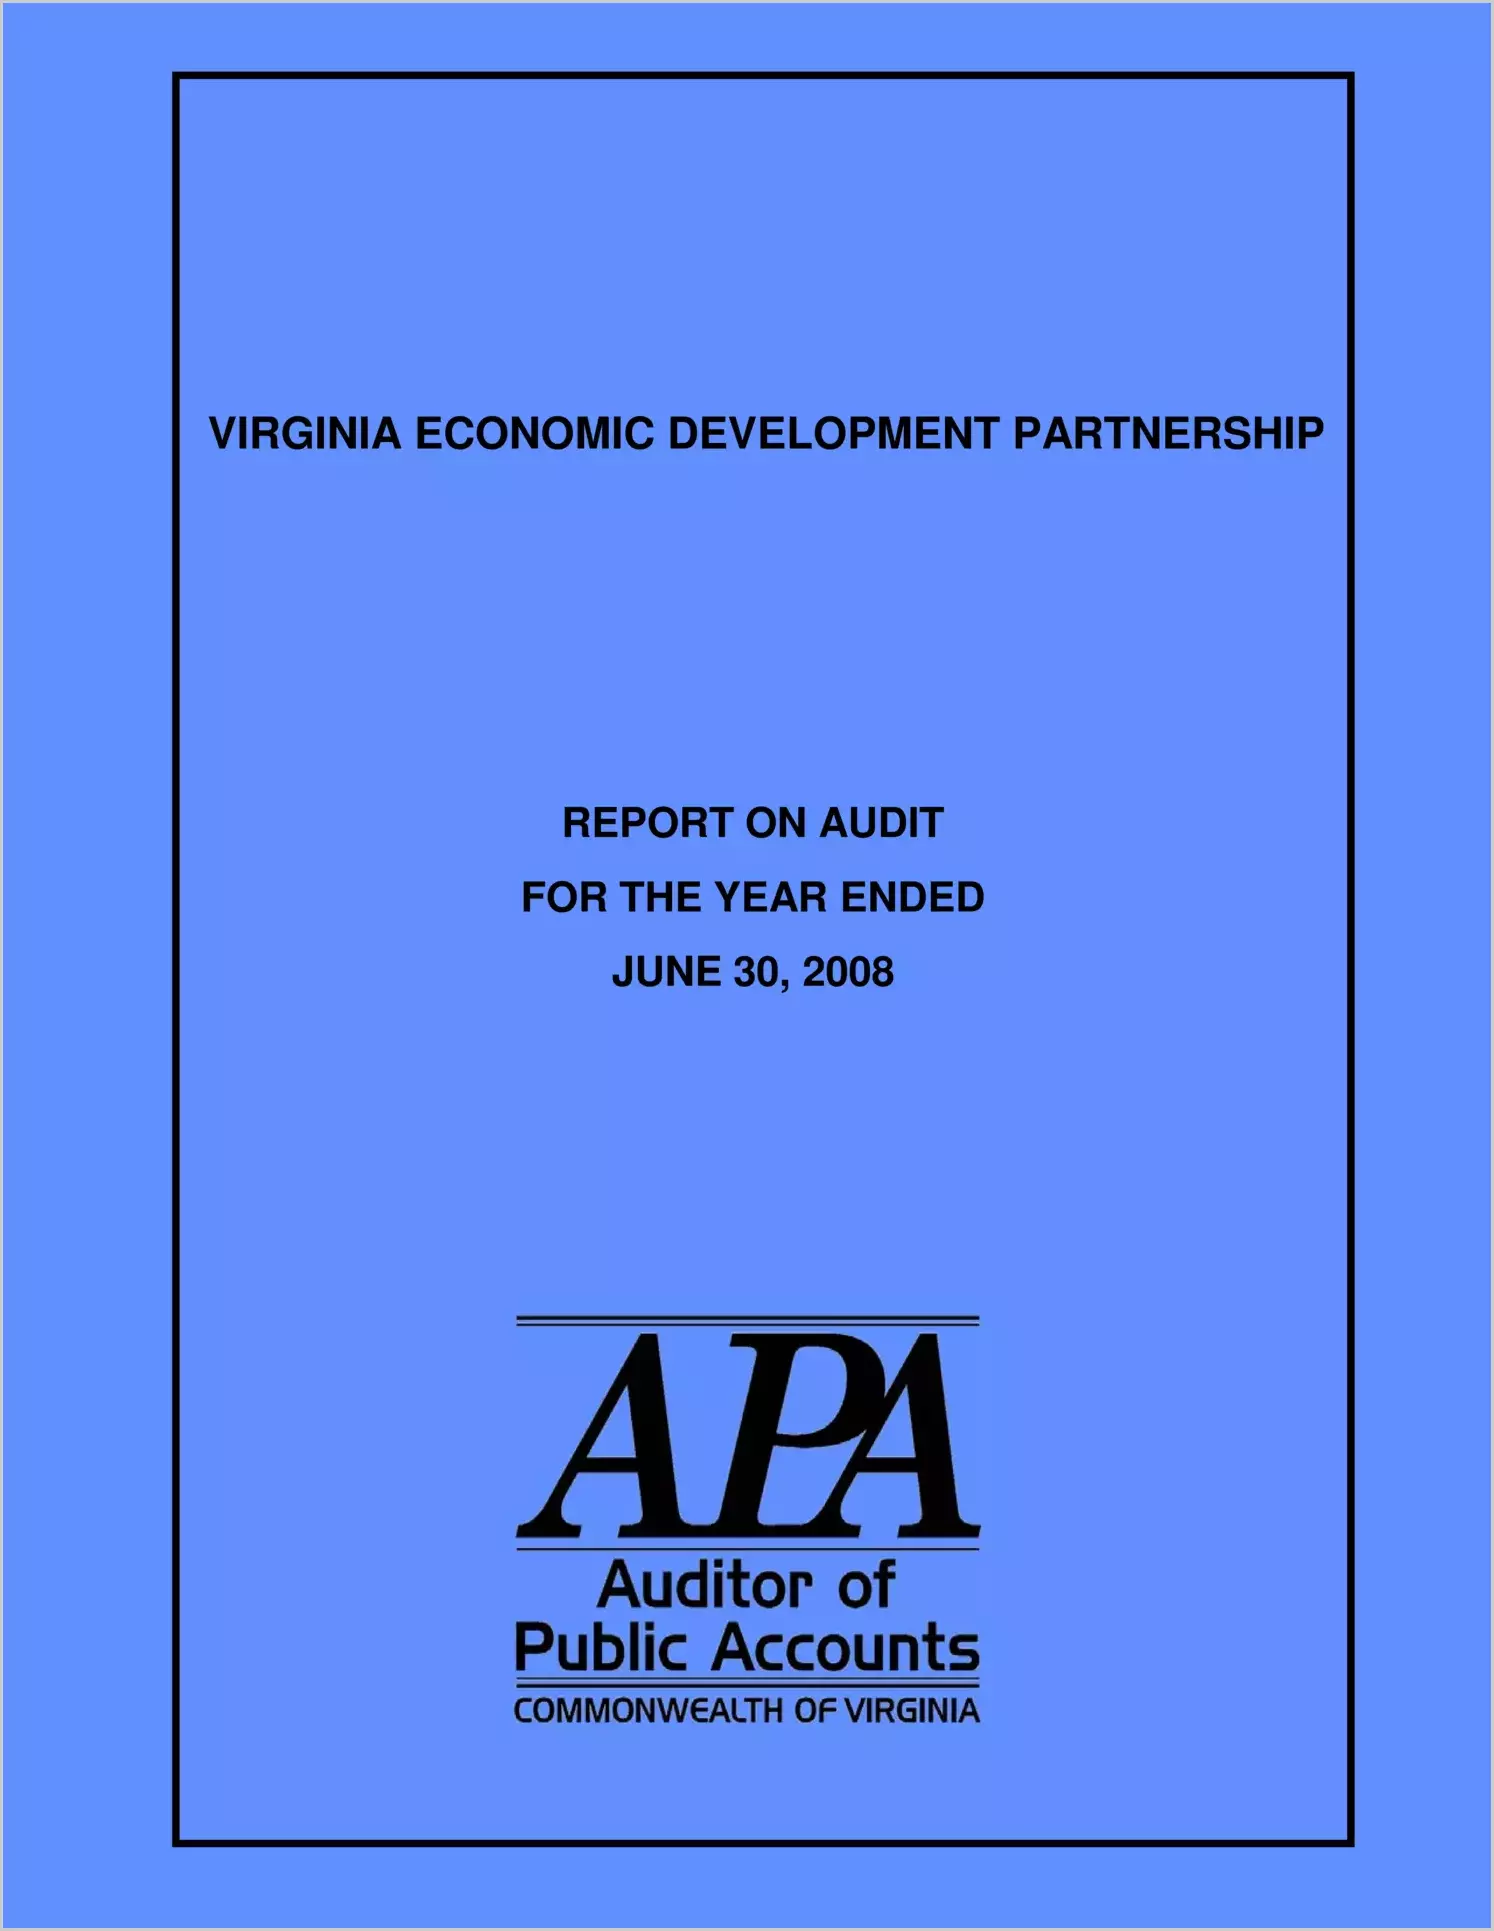 Virginia Economic Development Partnership for the year ended June 30, 2008